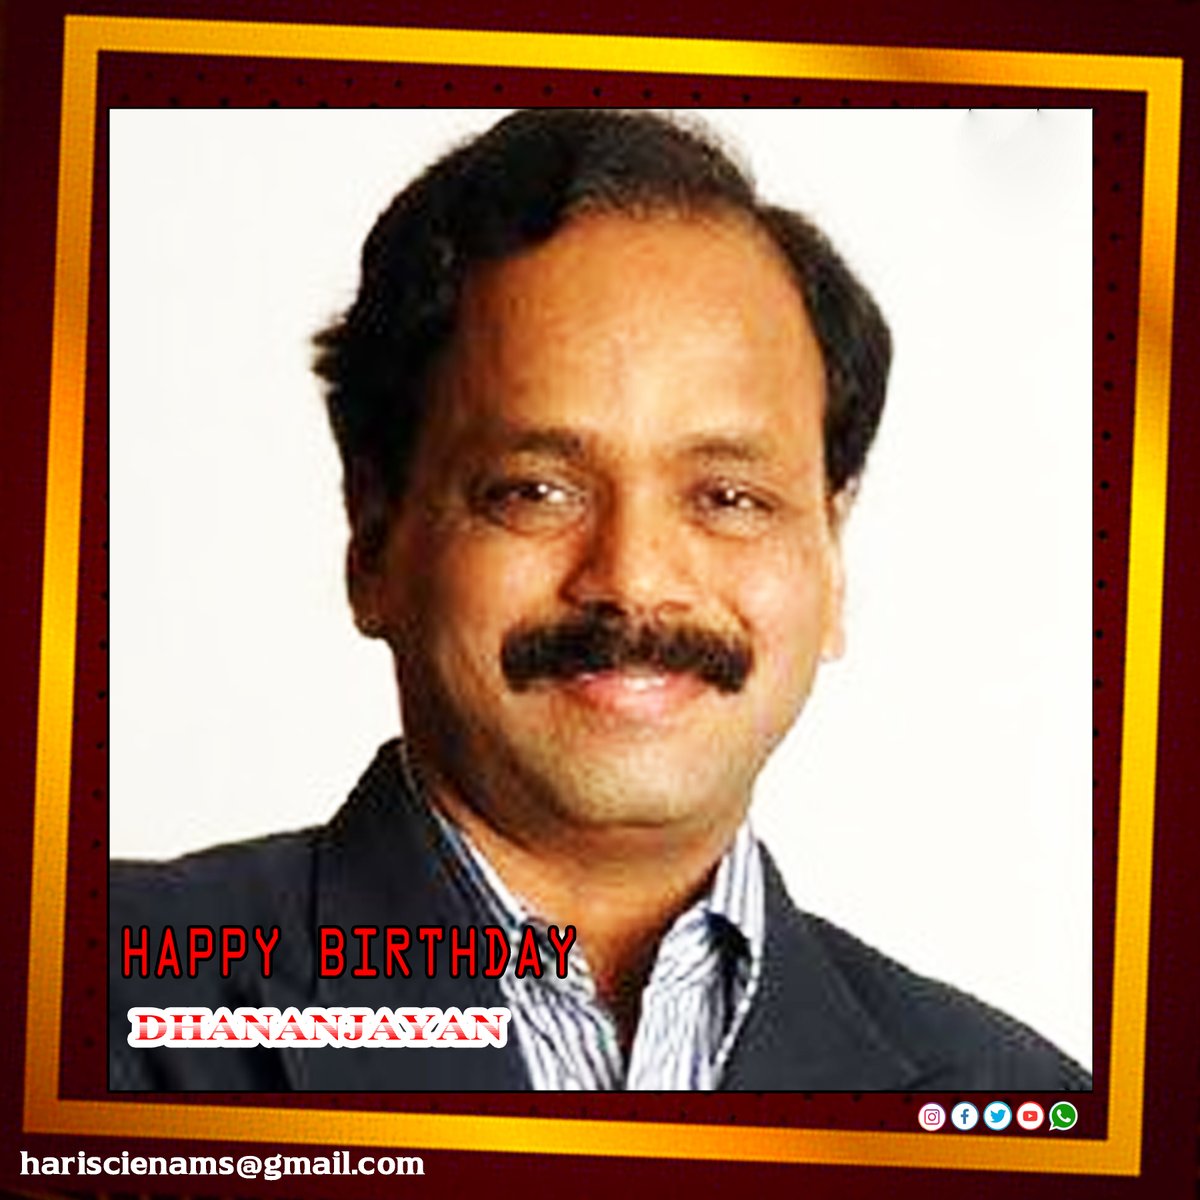 Wishing Producer G.Dhananjayan sir a very Happy Birthday 💐📷@Dhananjayang
#HappyBirthdayDhananjayan #HBDDhananjayan #Dhananjayan #hariscinemas